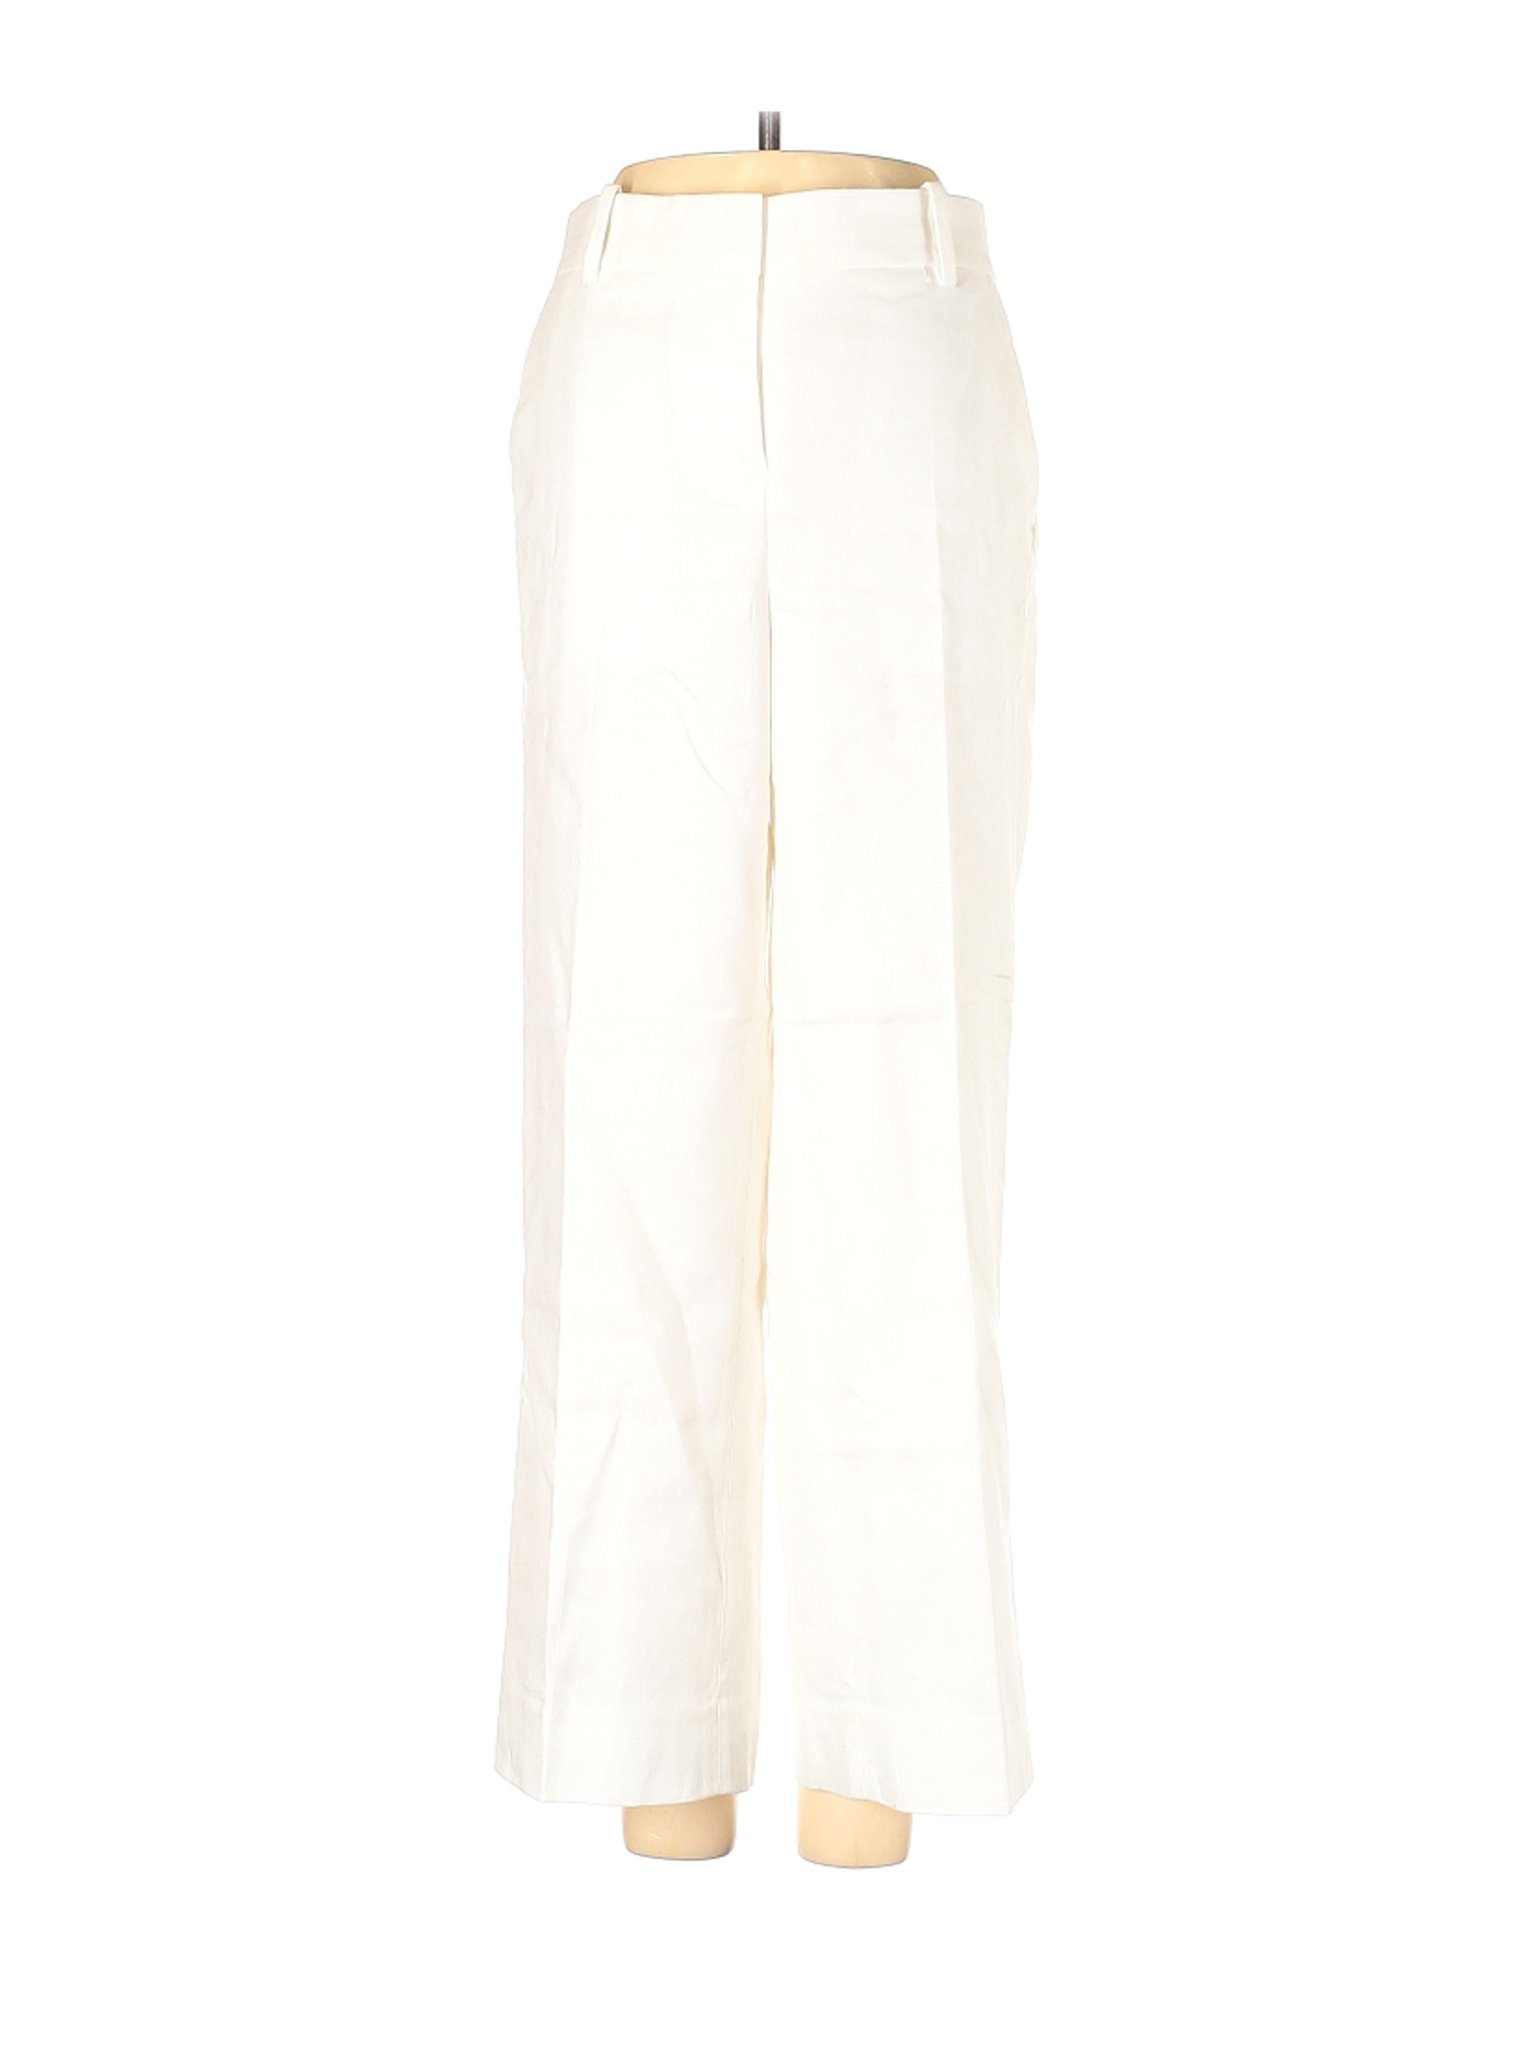 NWT J.Crew Women White Linen Pants 2 | eBay